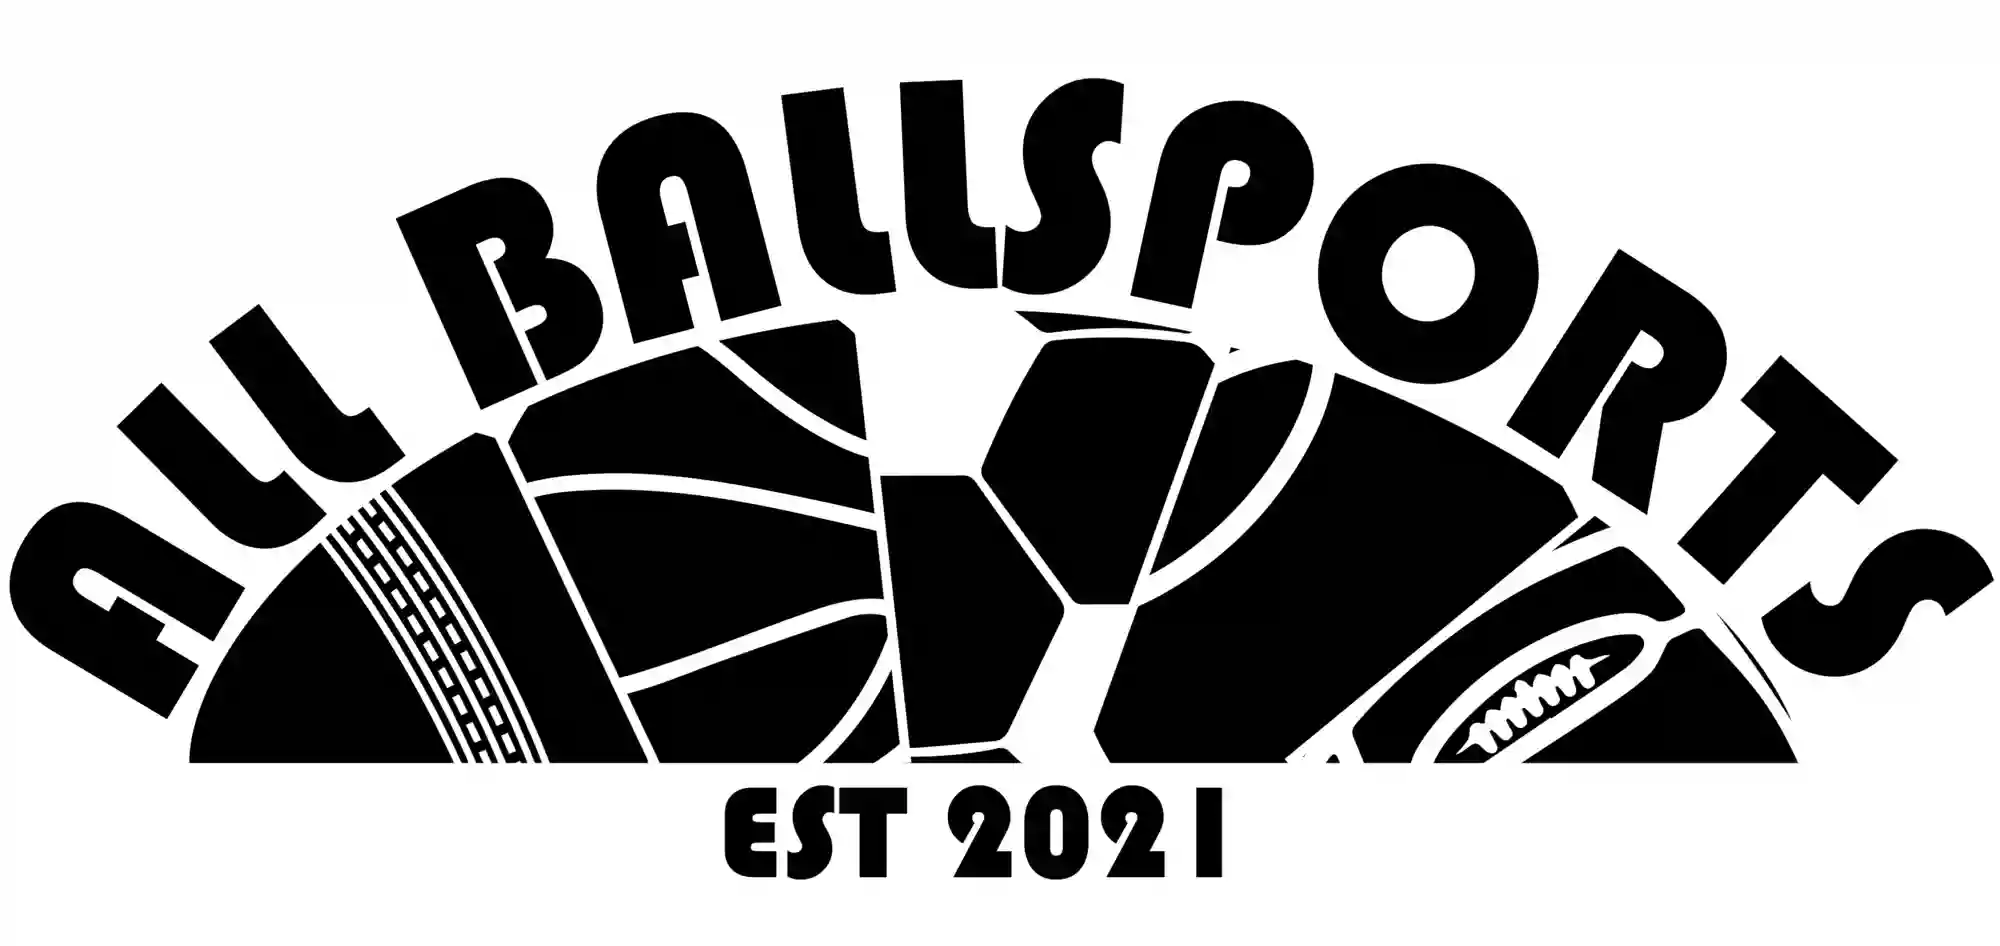 All Ballsports